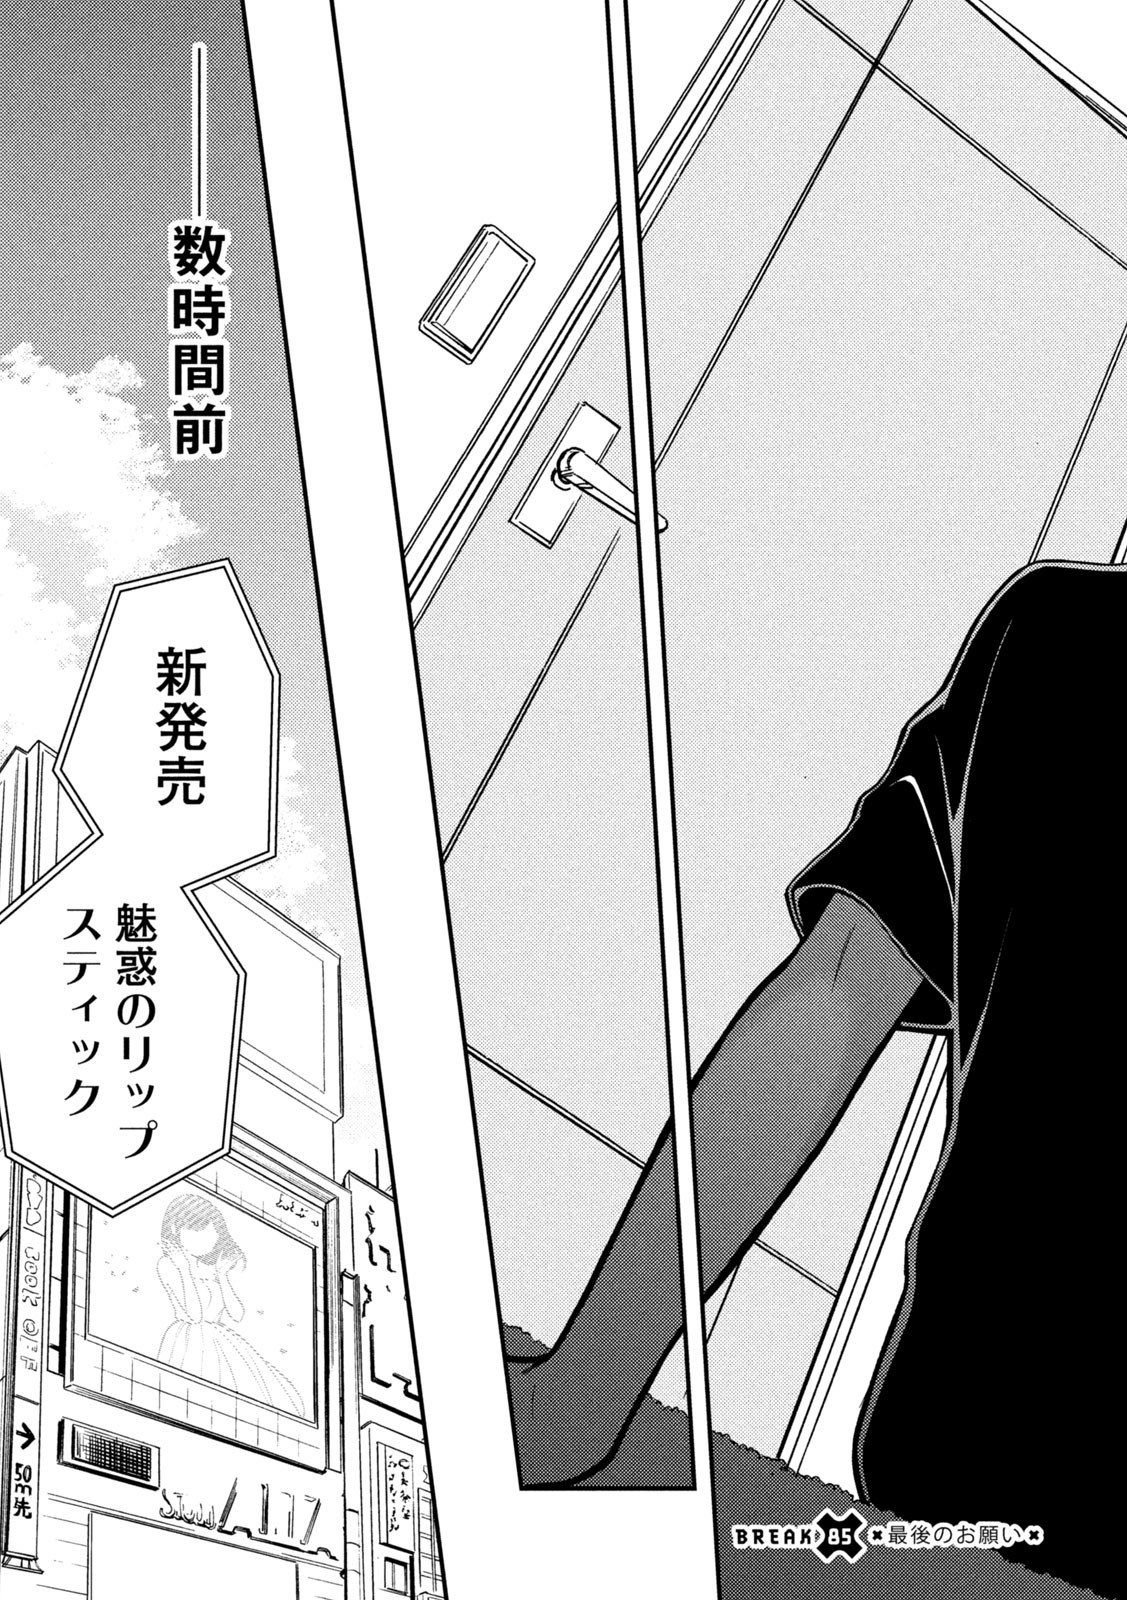 Watari-kun no xx ga Houkai Sunzen - Chapter 85 - Page 3